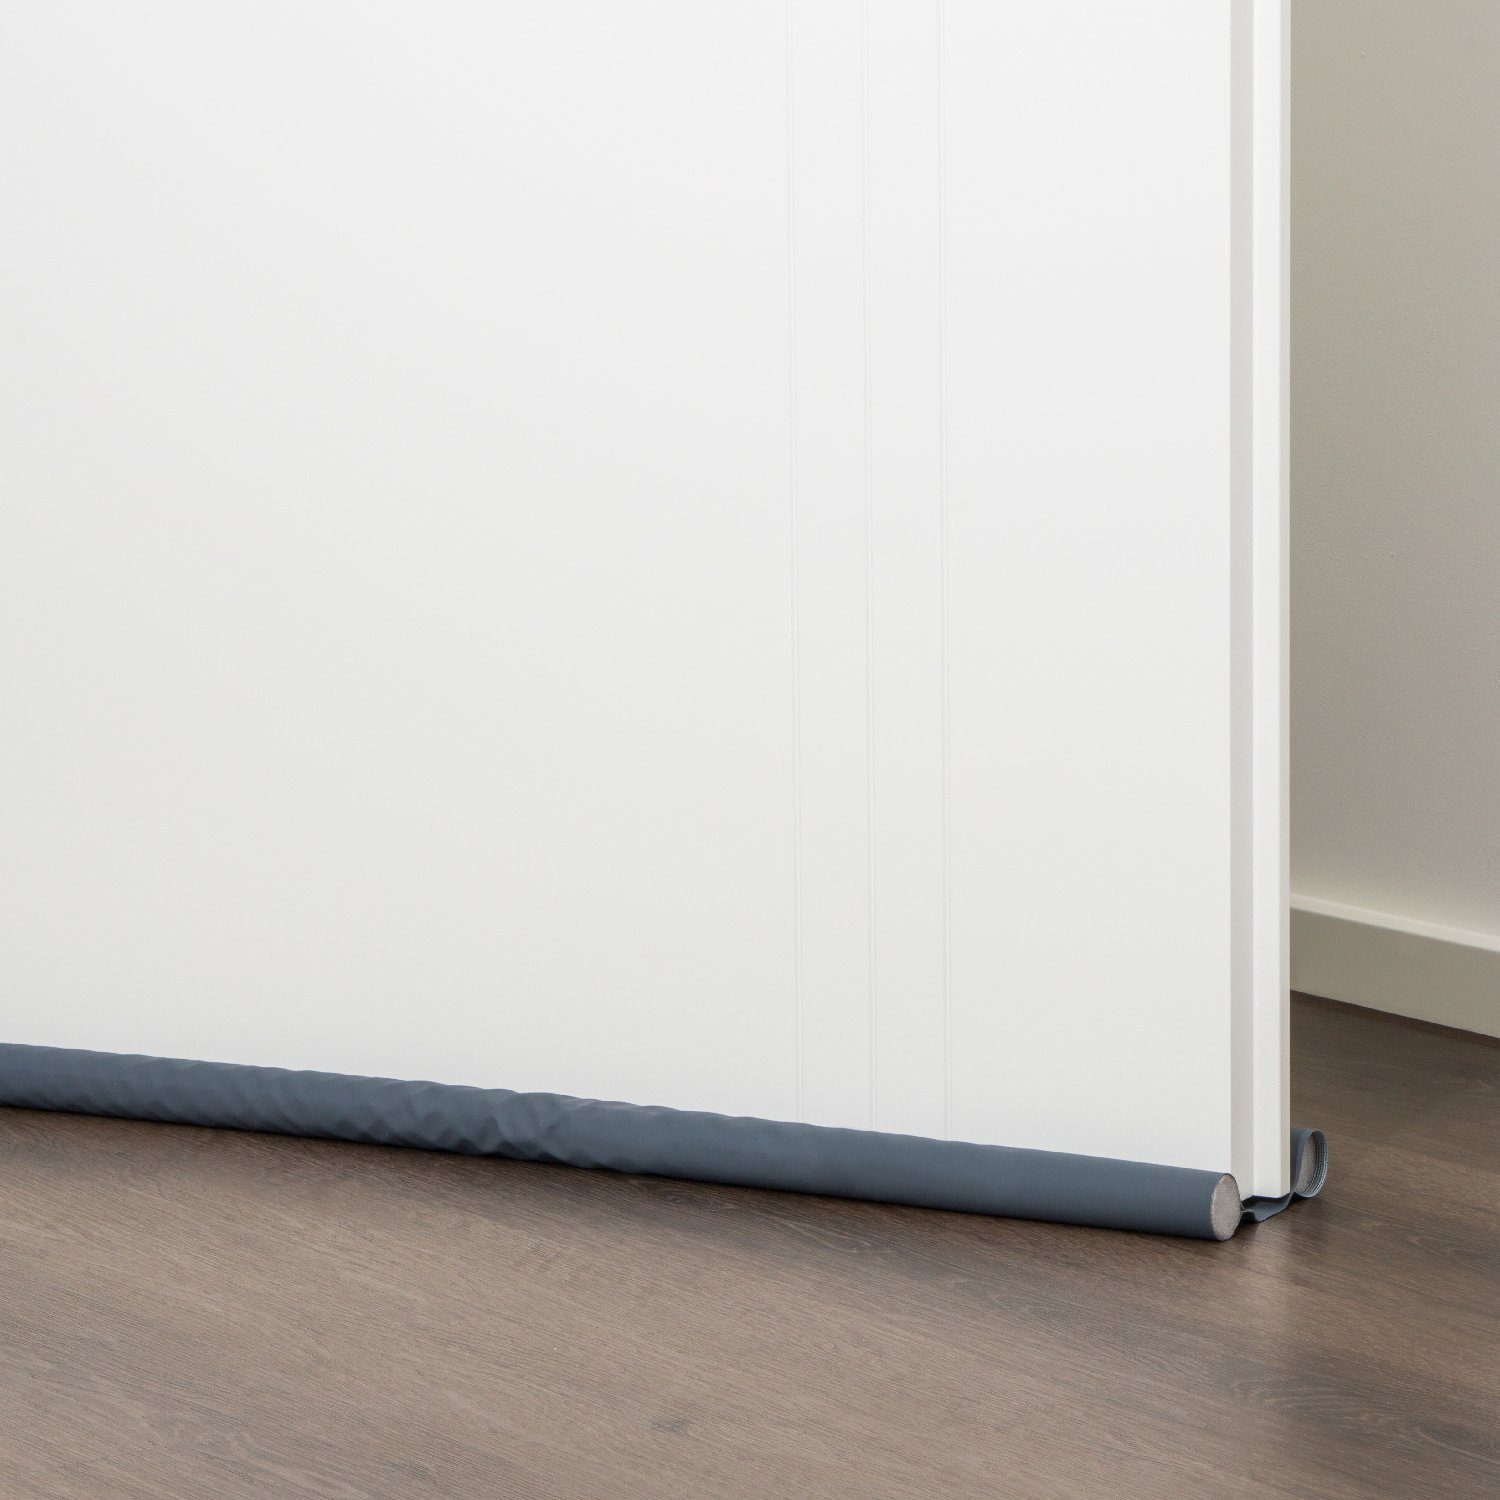 BURI Metall Türstopper 11x6cm Türpuffer Türhalter Türschutz Wandschutz  Bodenstopper